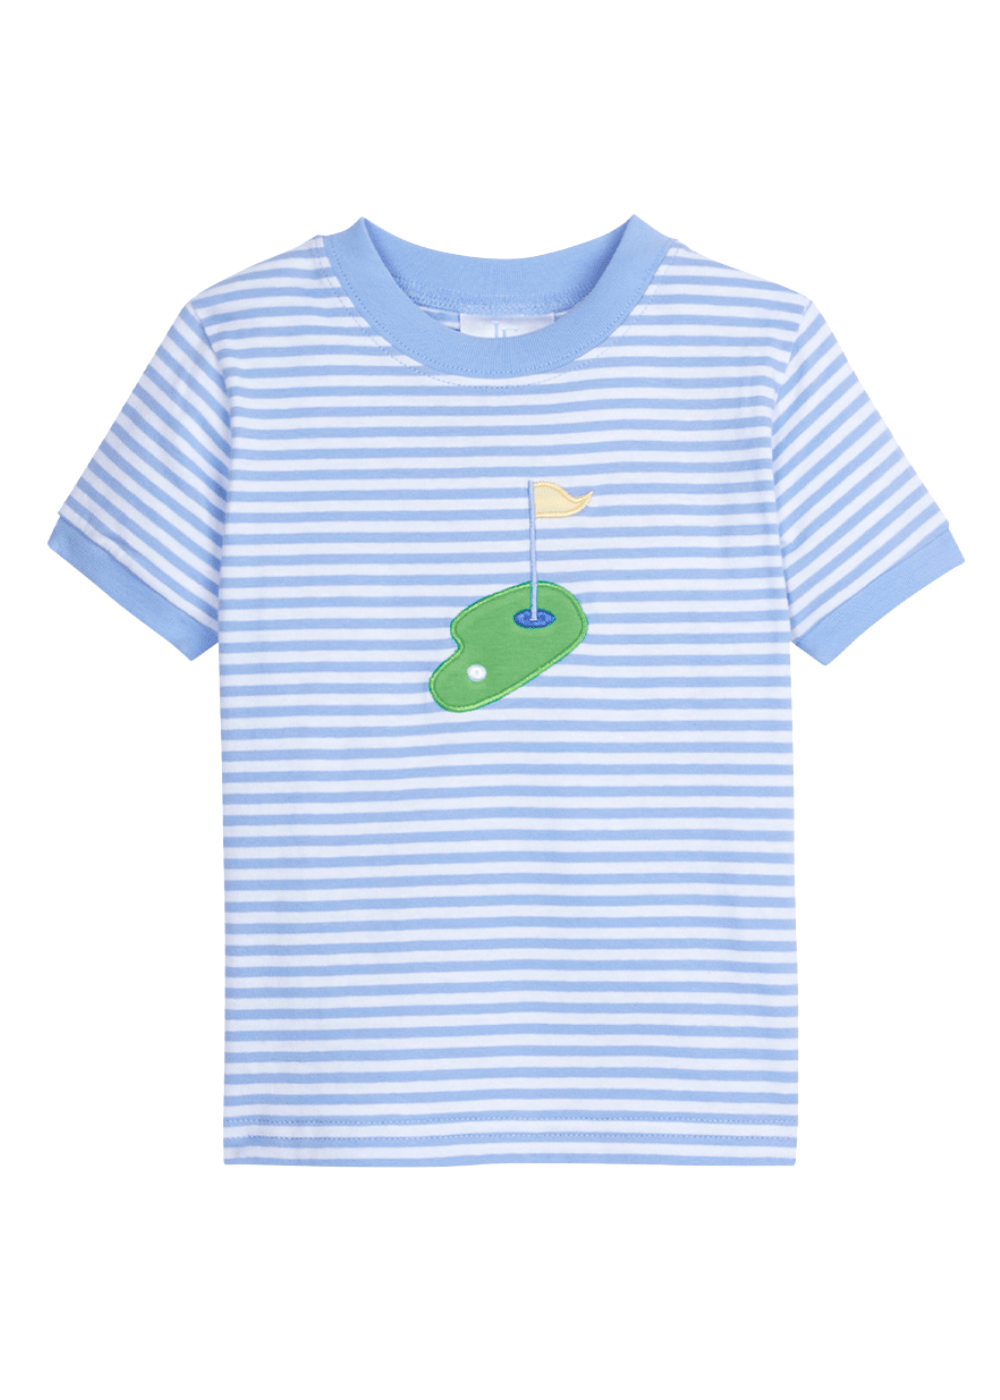 seguridadindustrialcr boy's blue stripe applique t-shirt with golf green applique